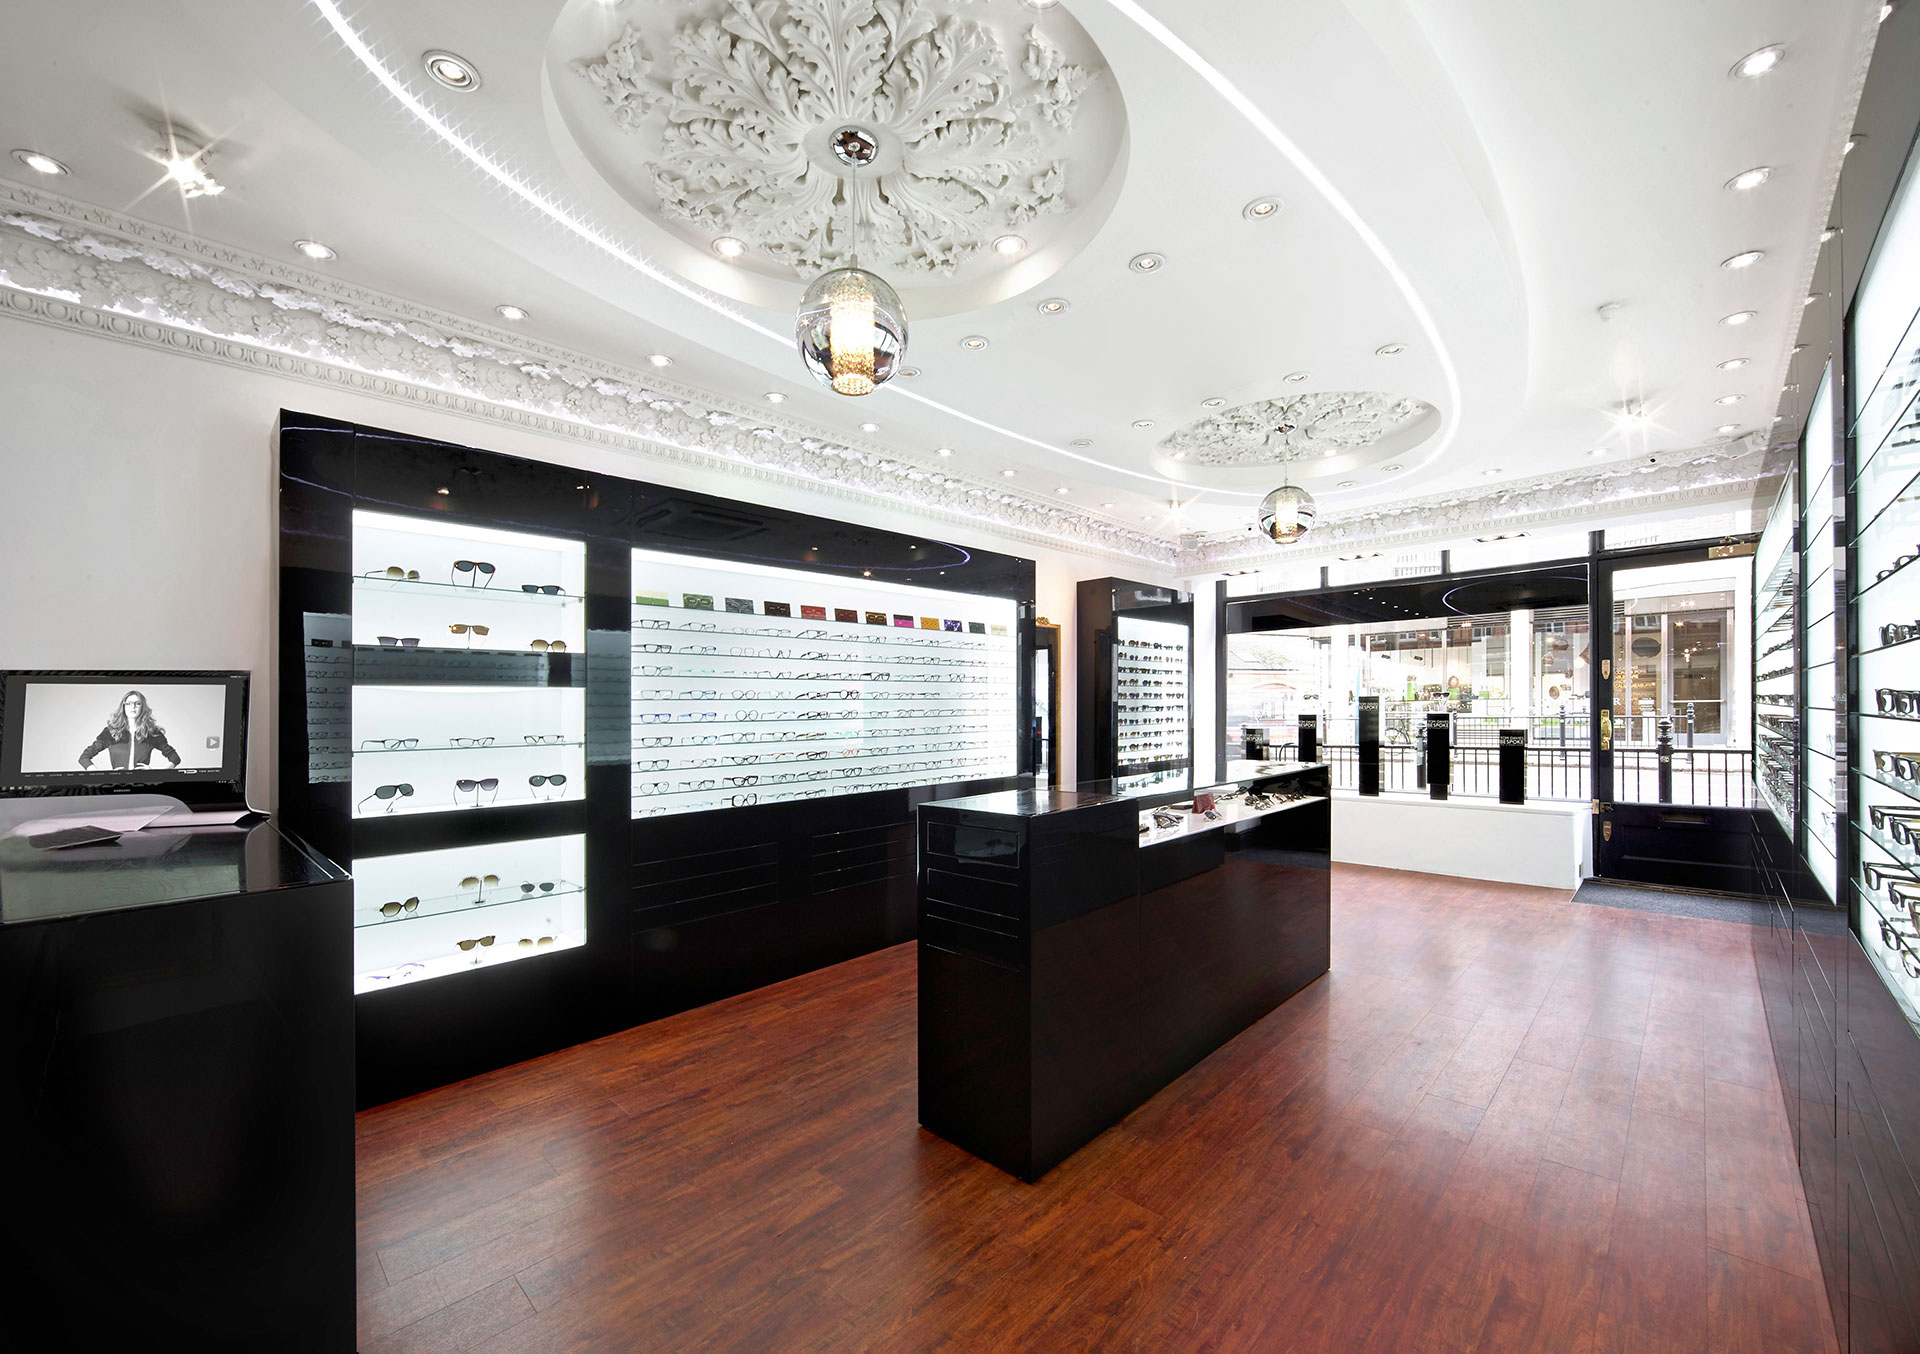 Shop floor of Tom Davies Bespoke Opticians in Sloane Square, Chelsea